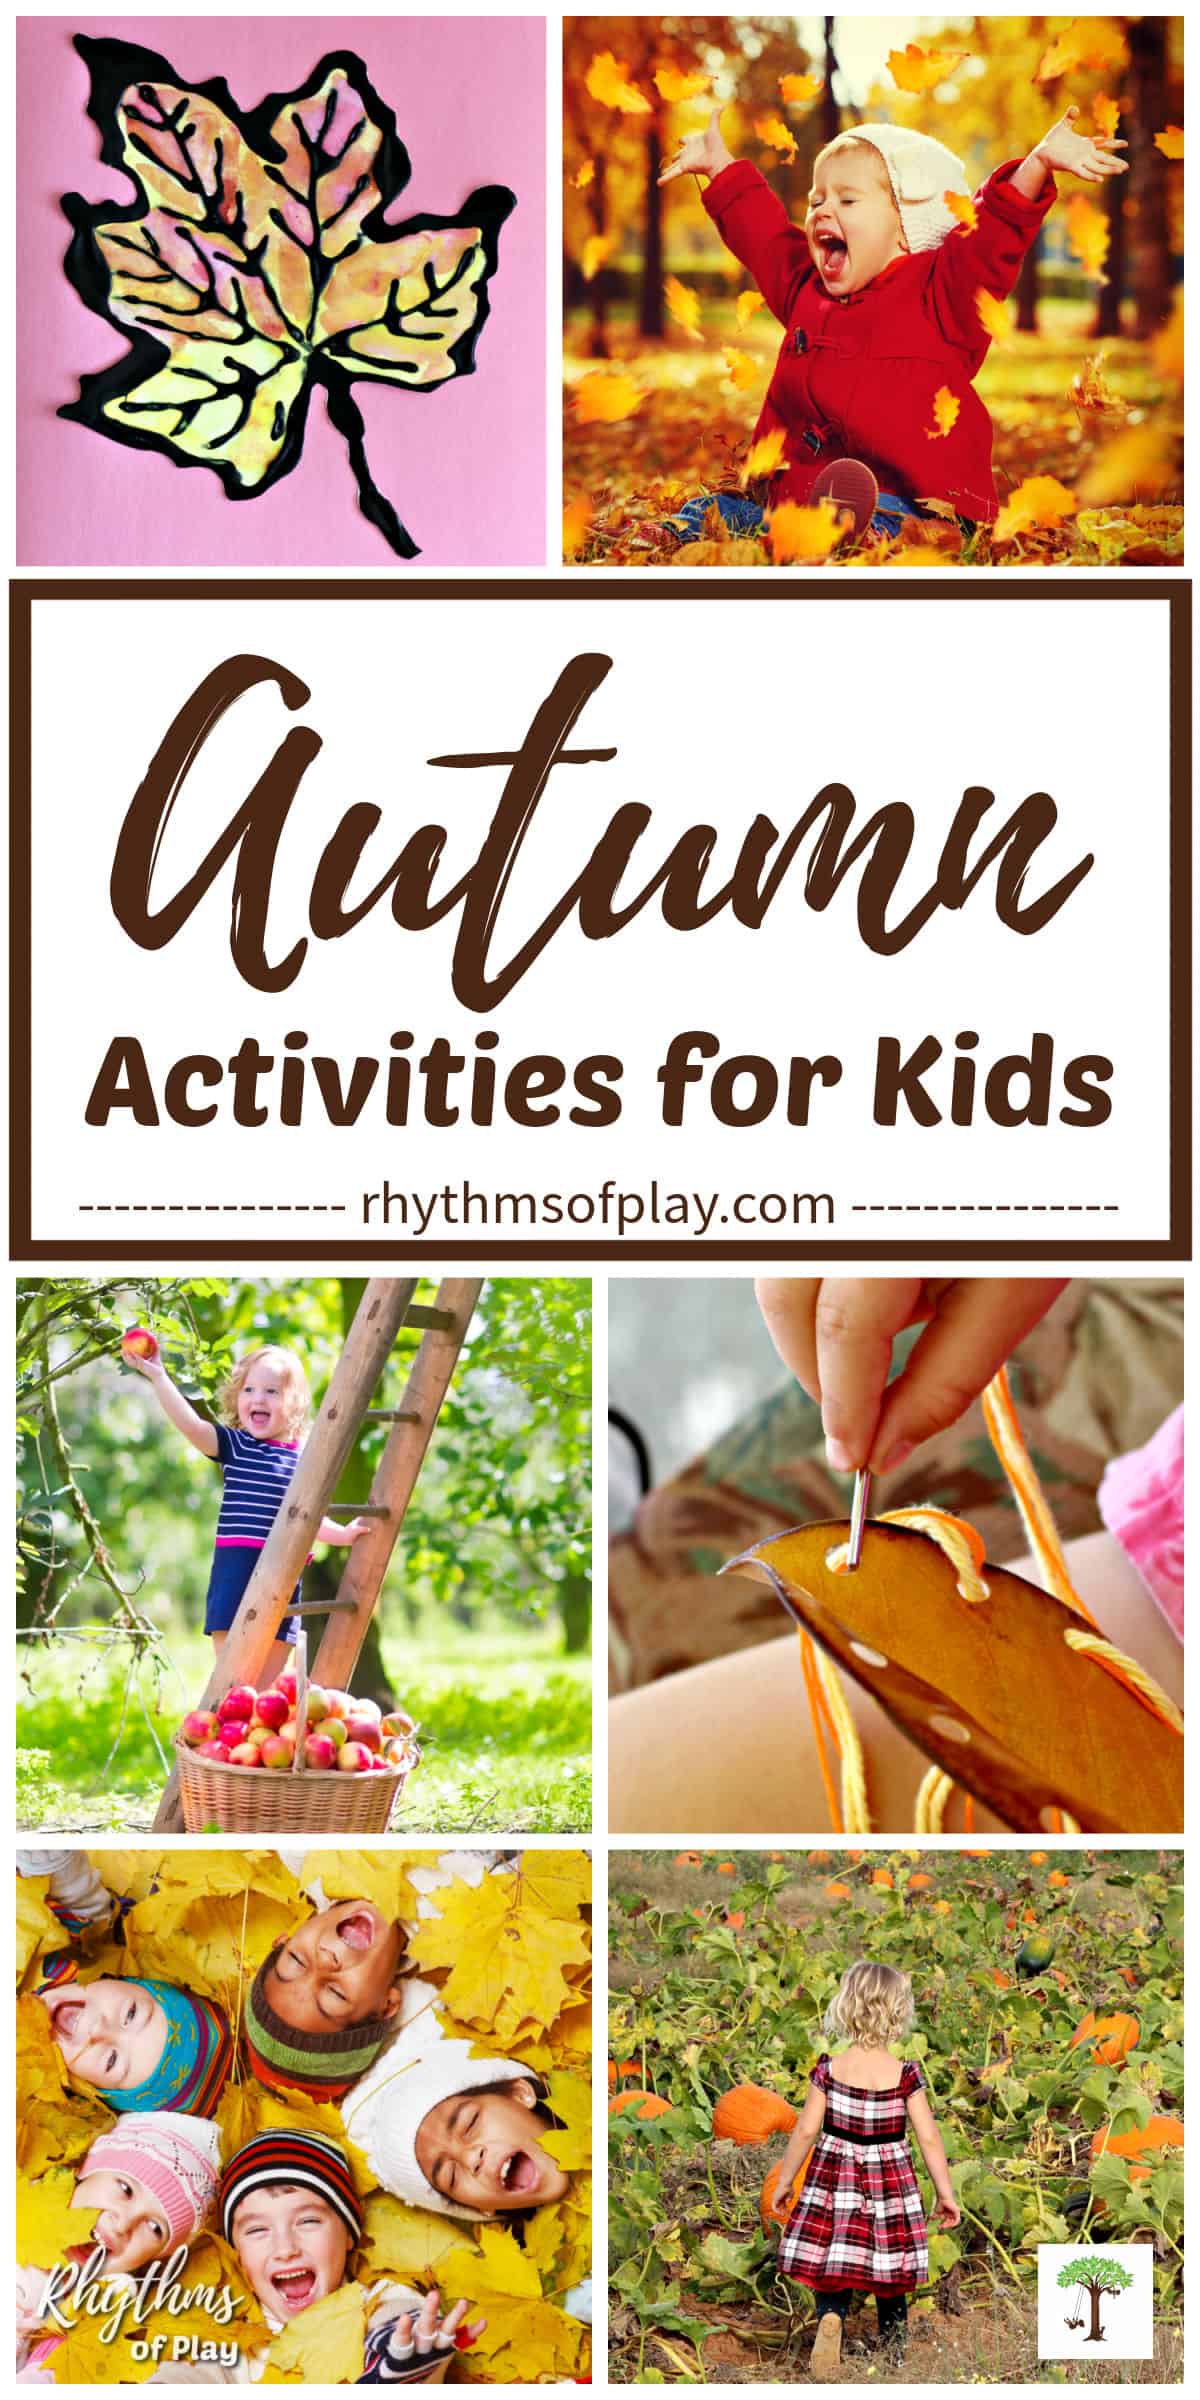 Fun Fall Activities for Kids